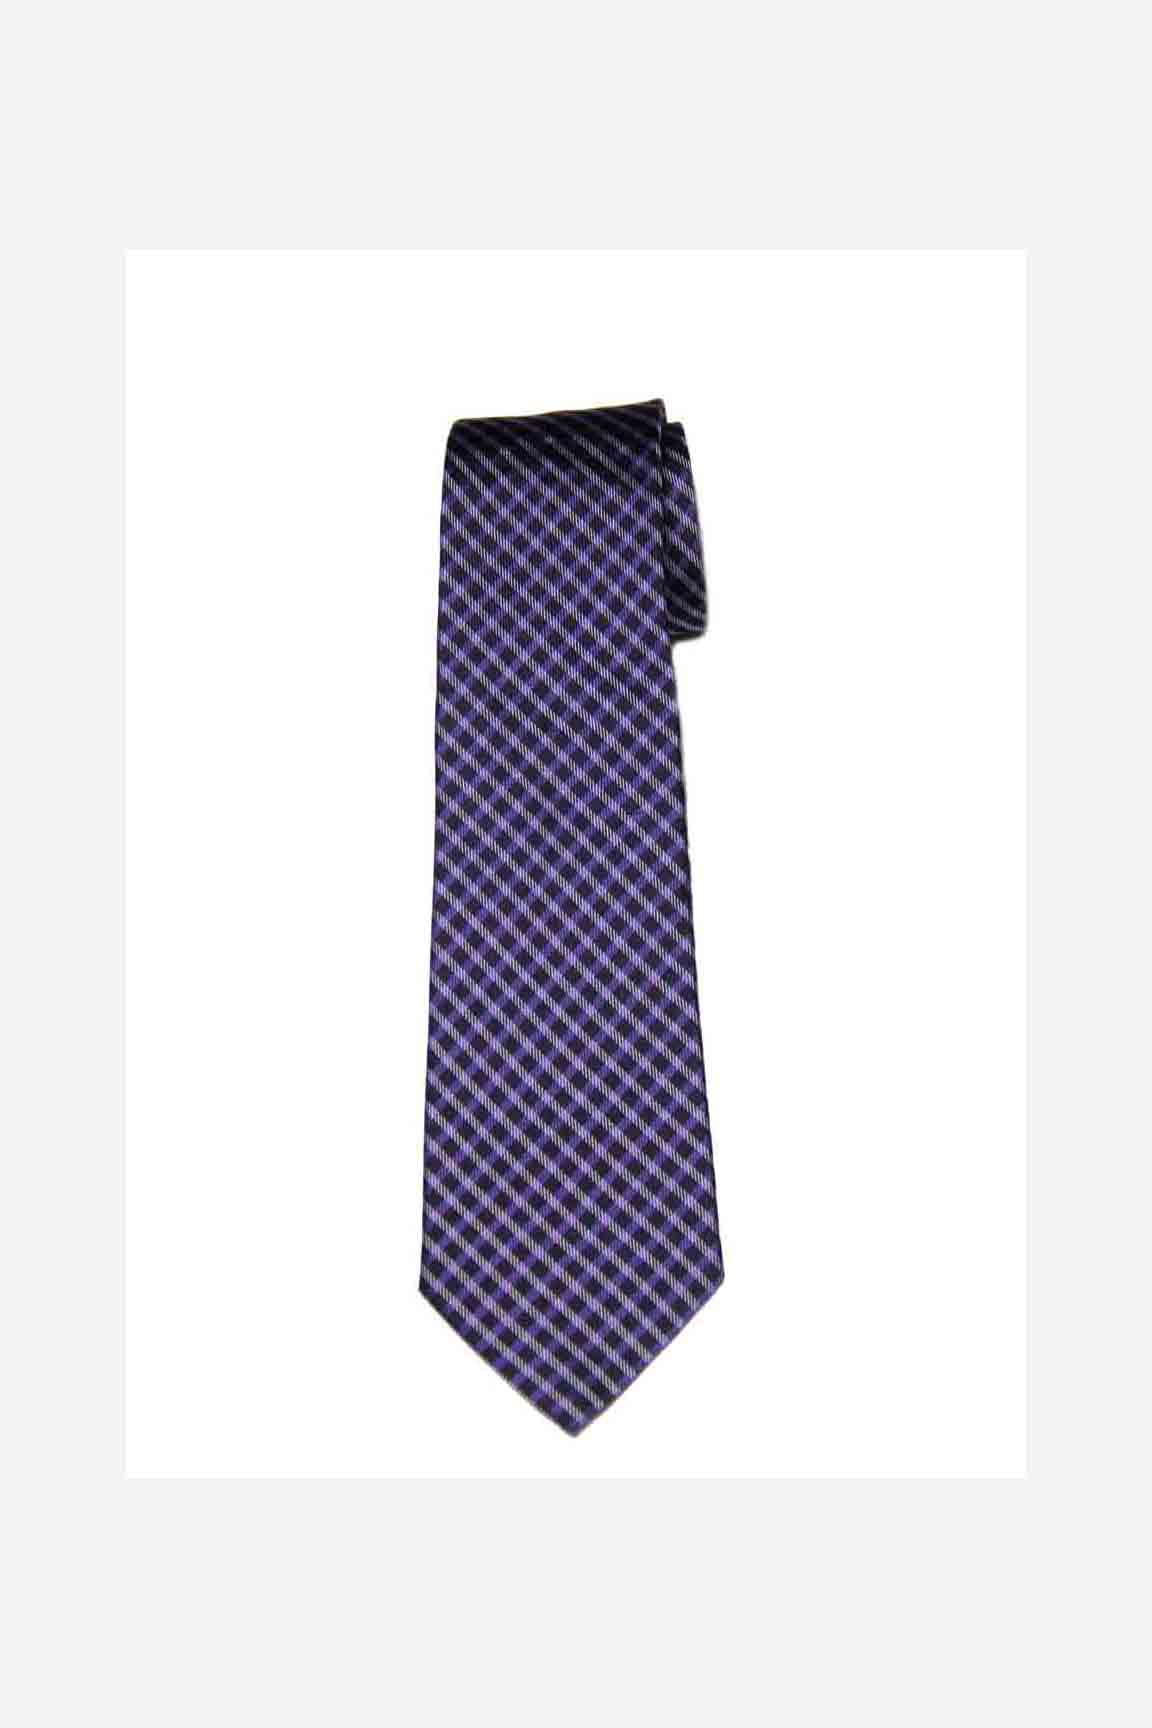 Paul Smith Italian Silk Tie Purple Black Lattice Check Pattern Men's